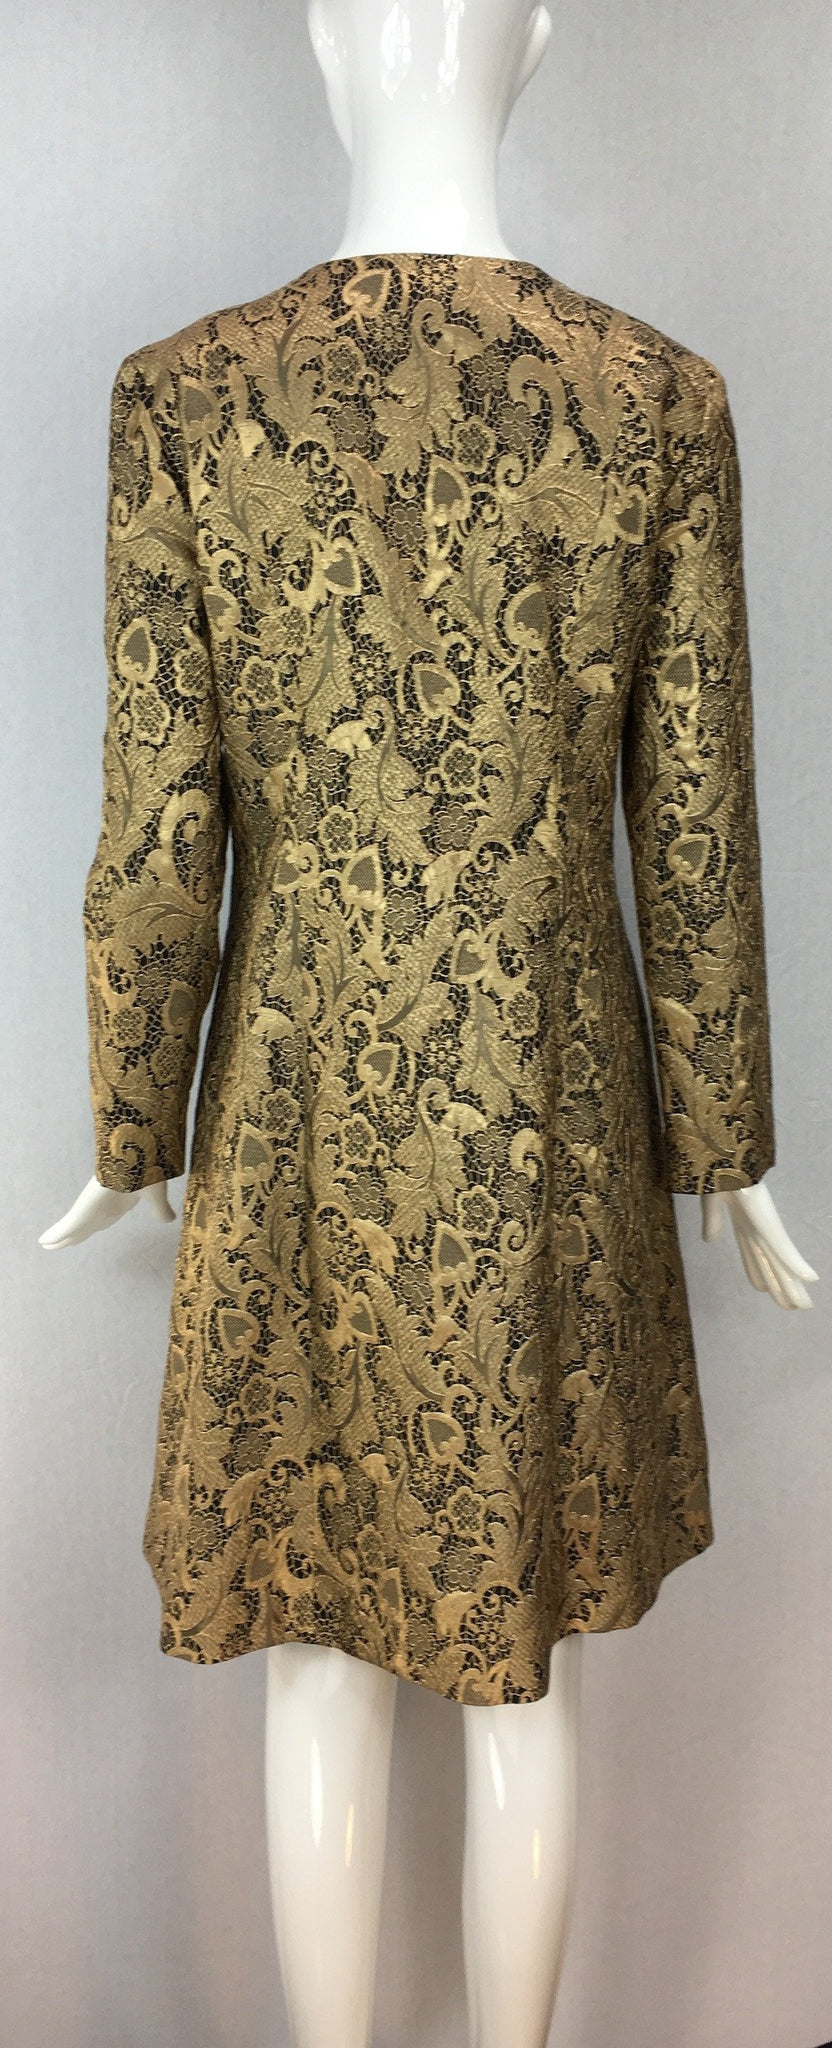 Janet Deleuse Designer Couture Coat, SALE, SOLD